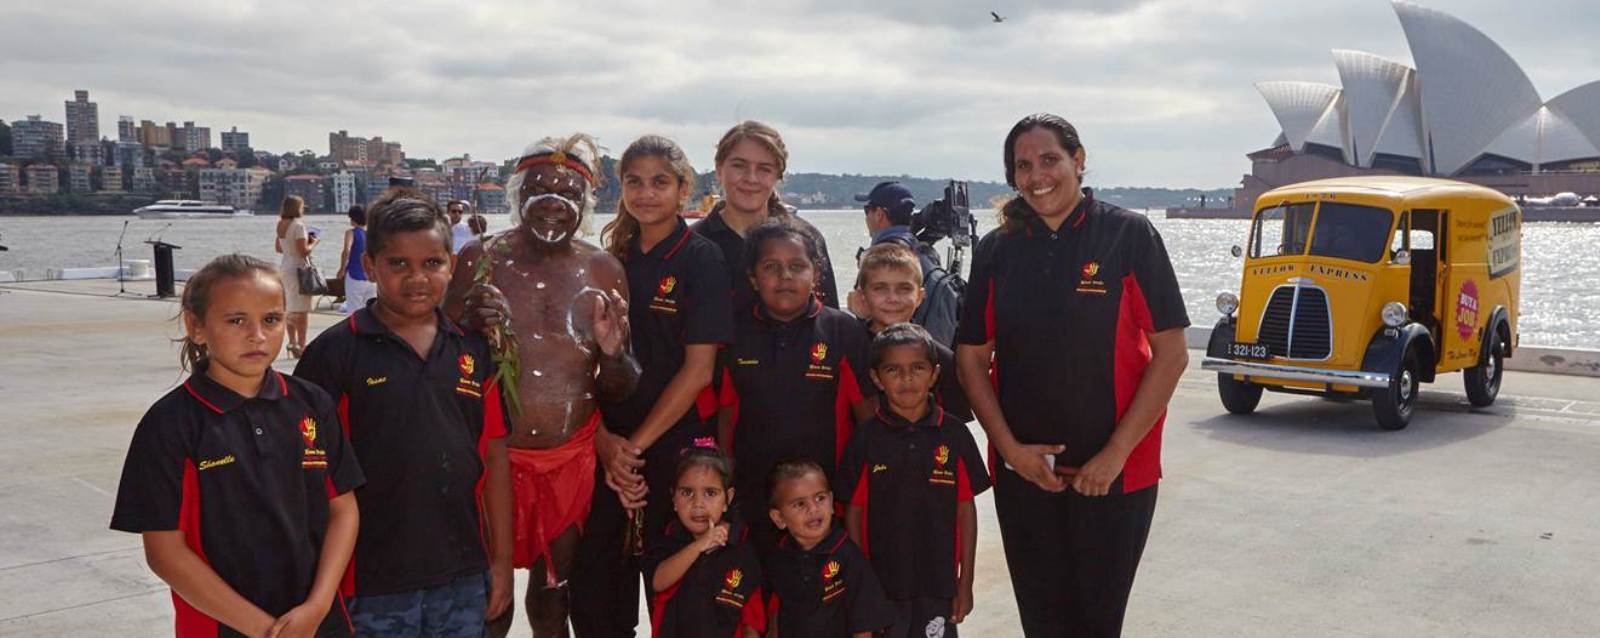 ‘Sad past, hopeful future’: Indigenous voices on Australia Day